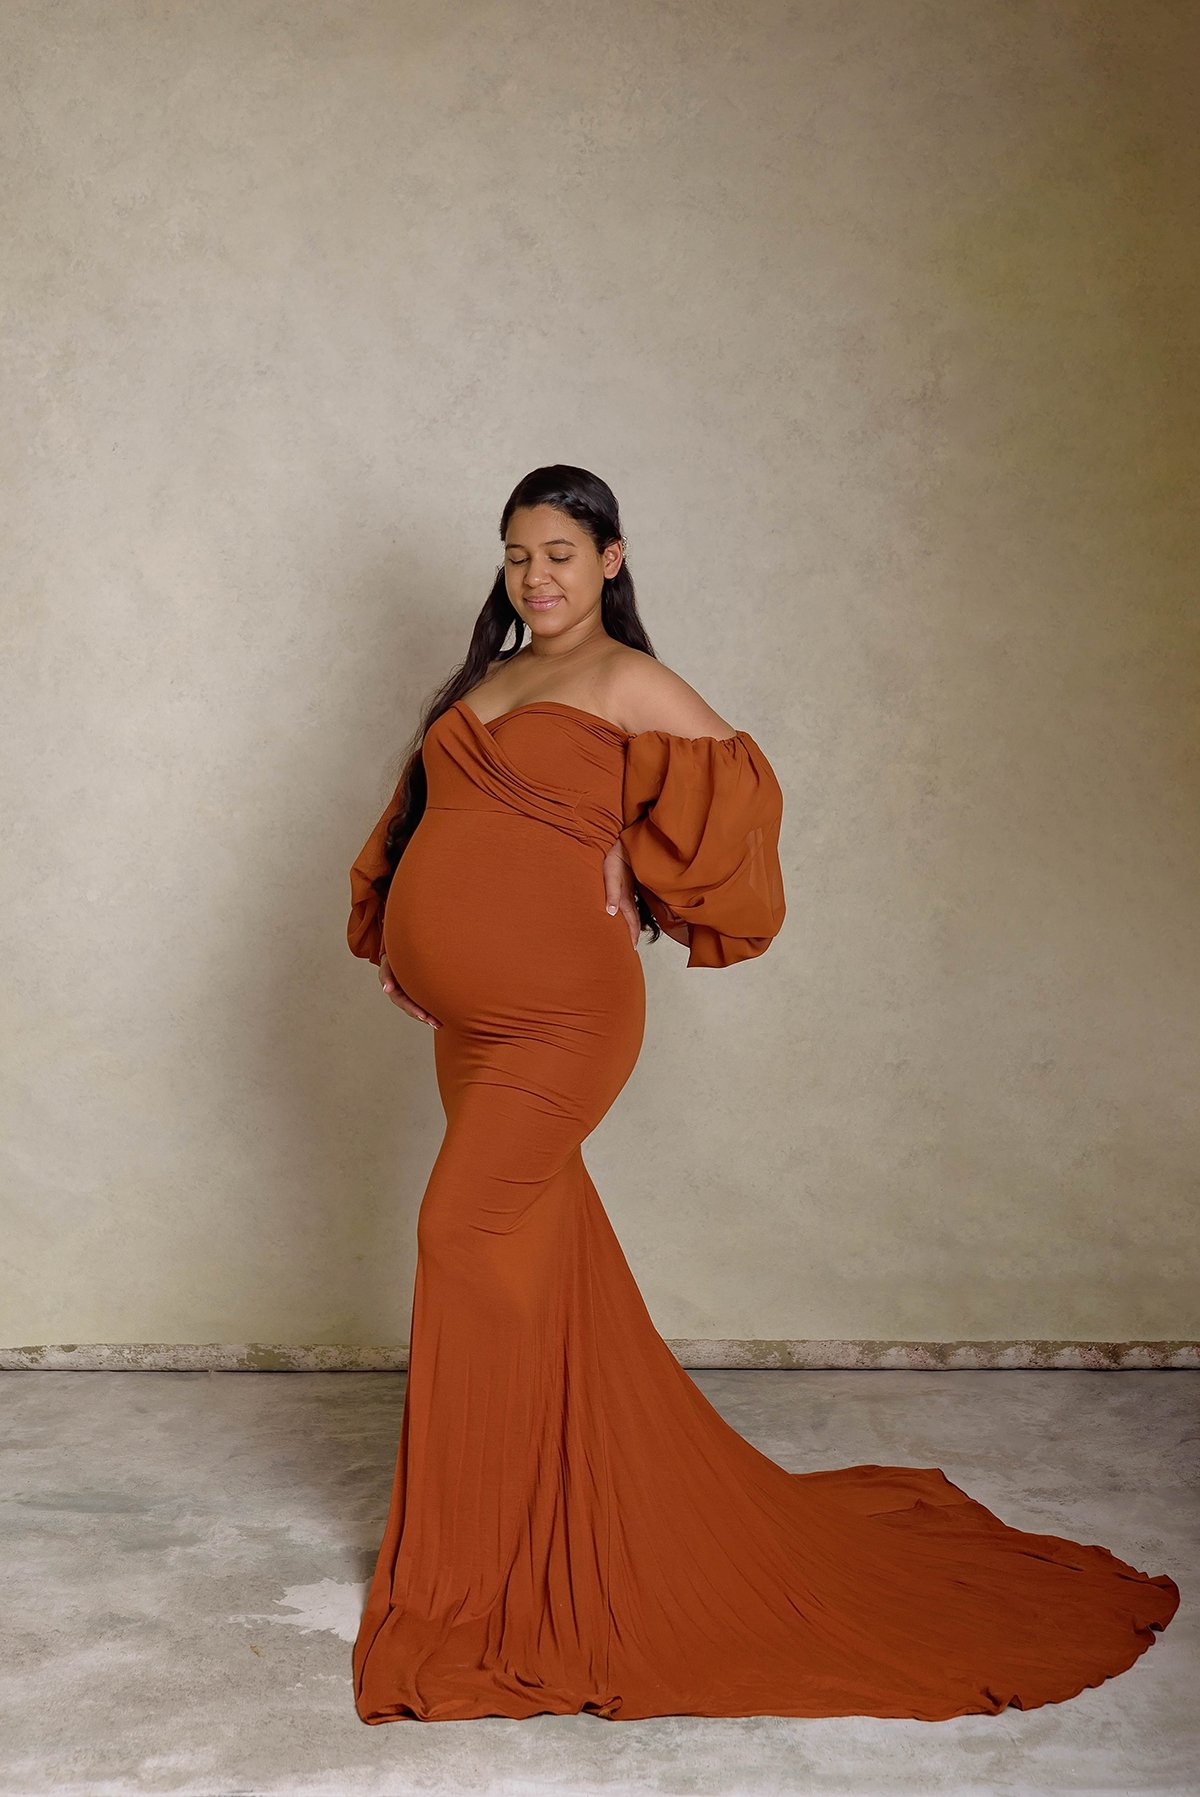 maternity-pregnancy-photographer-san-juan-puerto-rico-orange-dress-gown-long-sleeve-fotografa-maternidad-embarazo-01.jpg